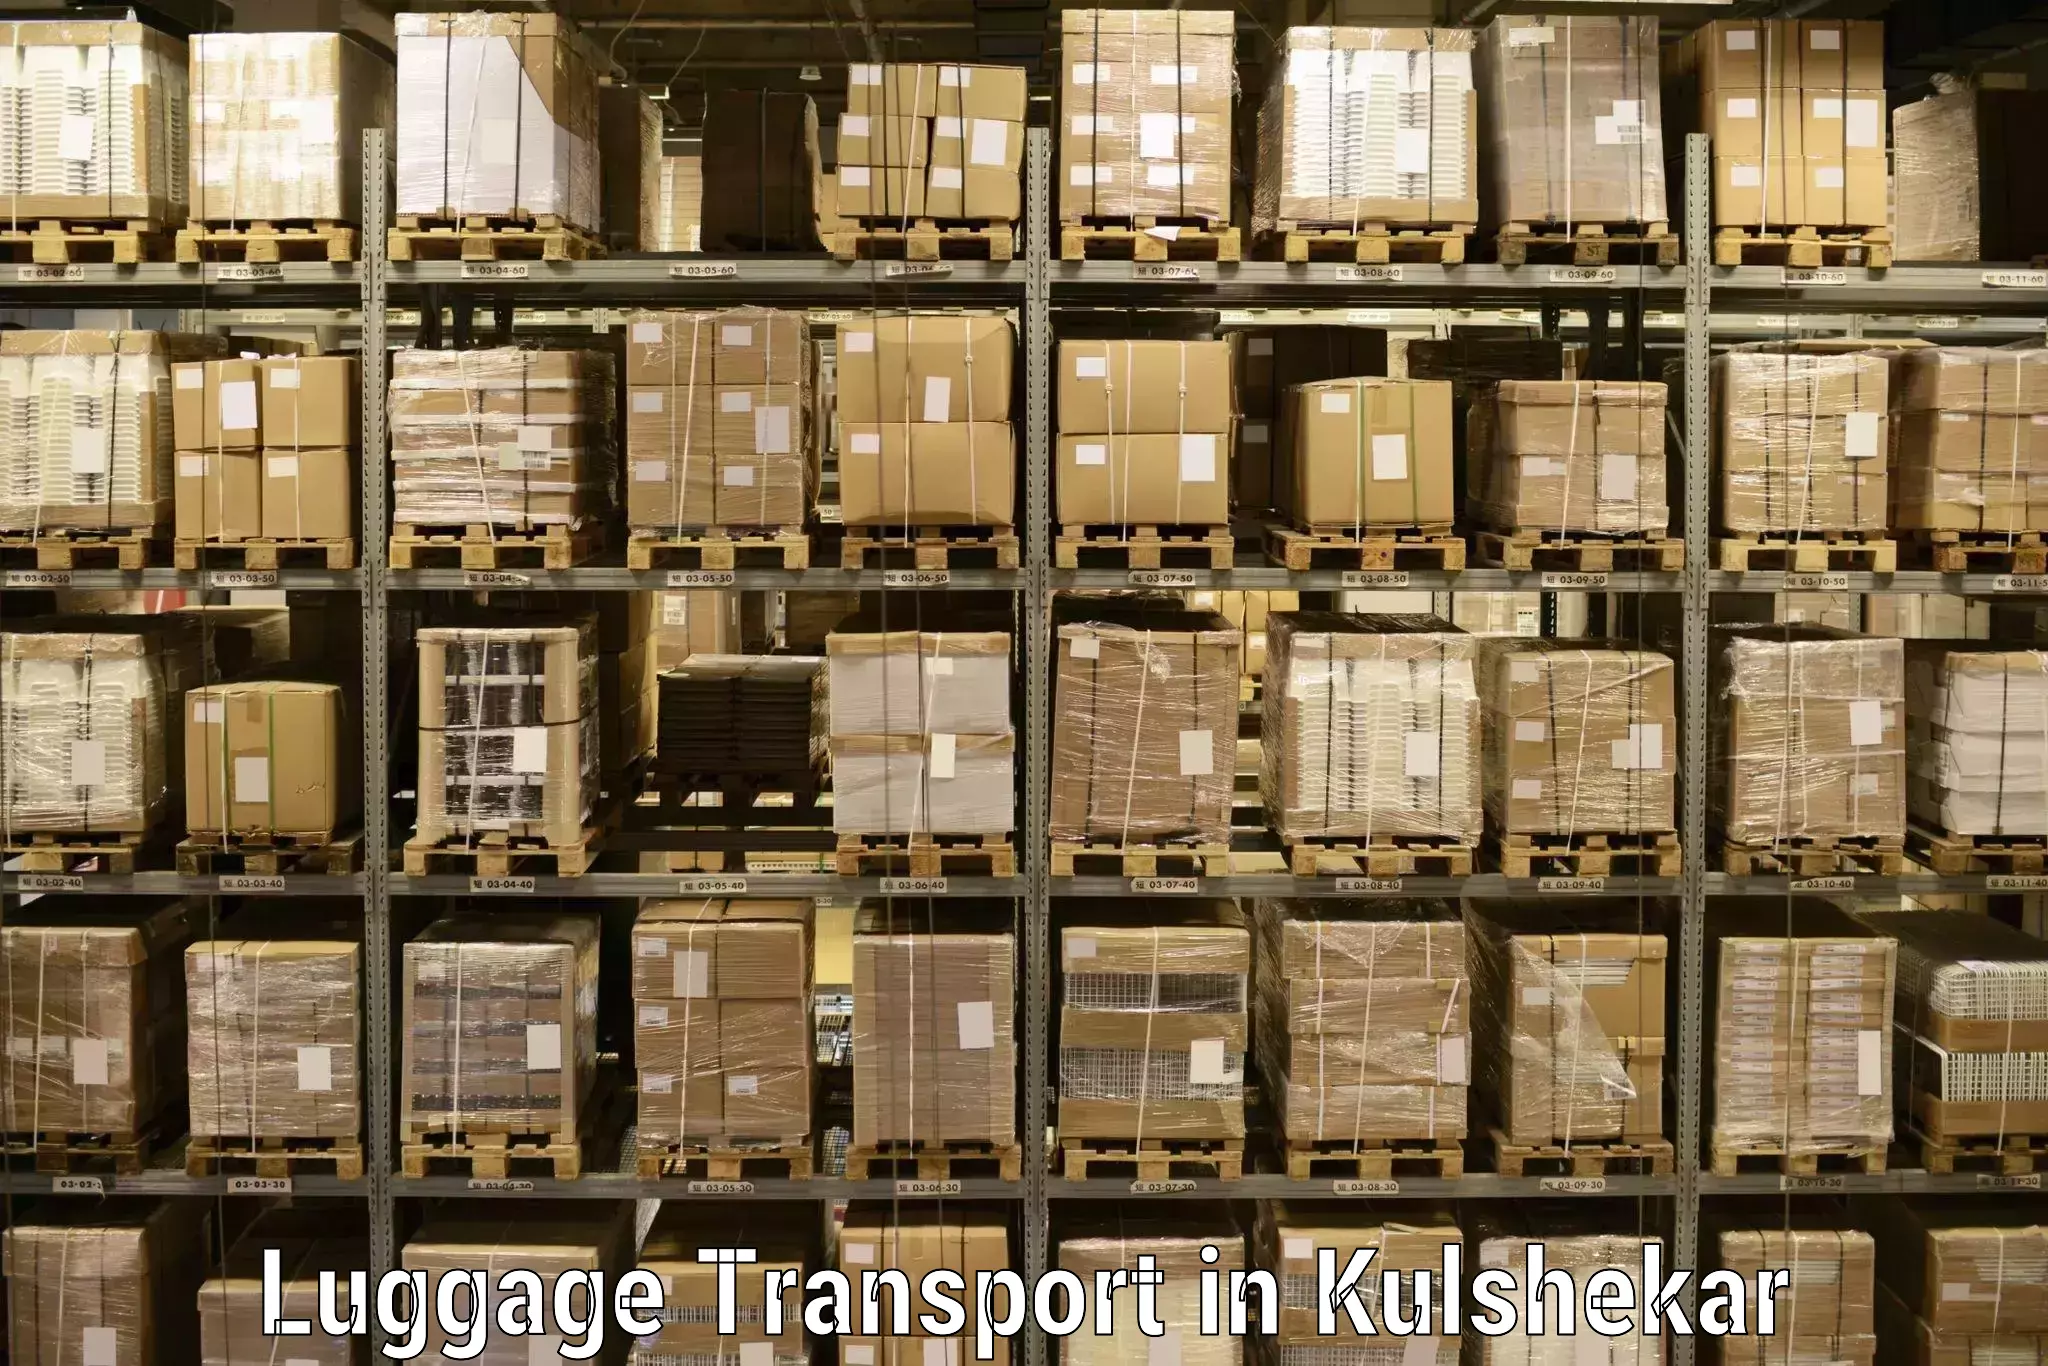 Business luggage transport in Kulshekar